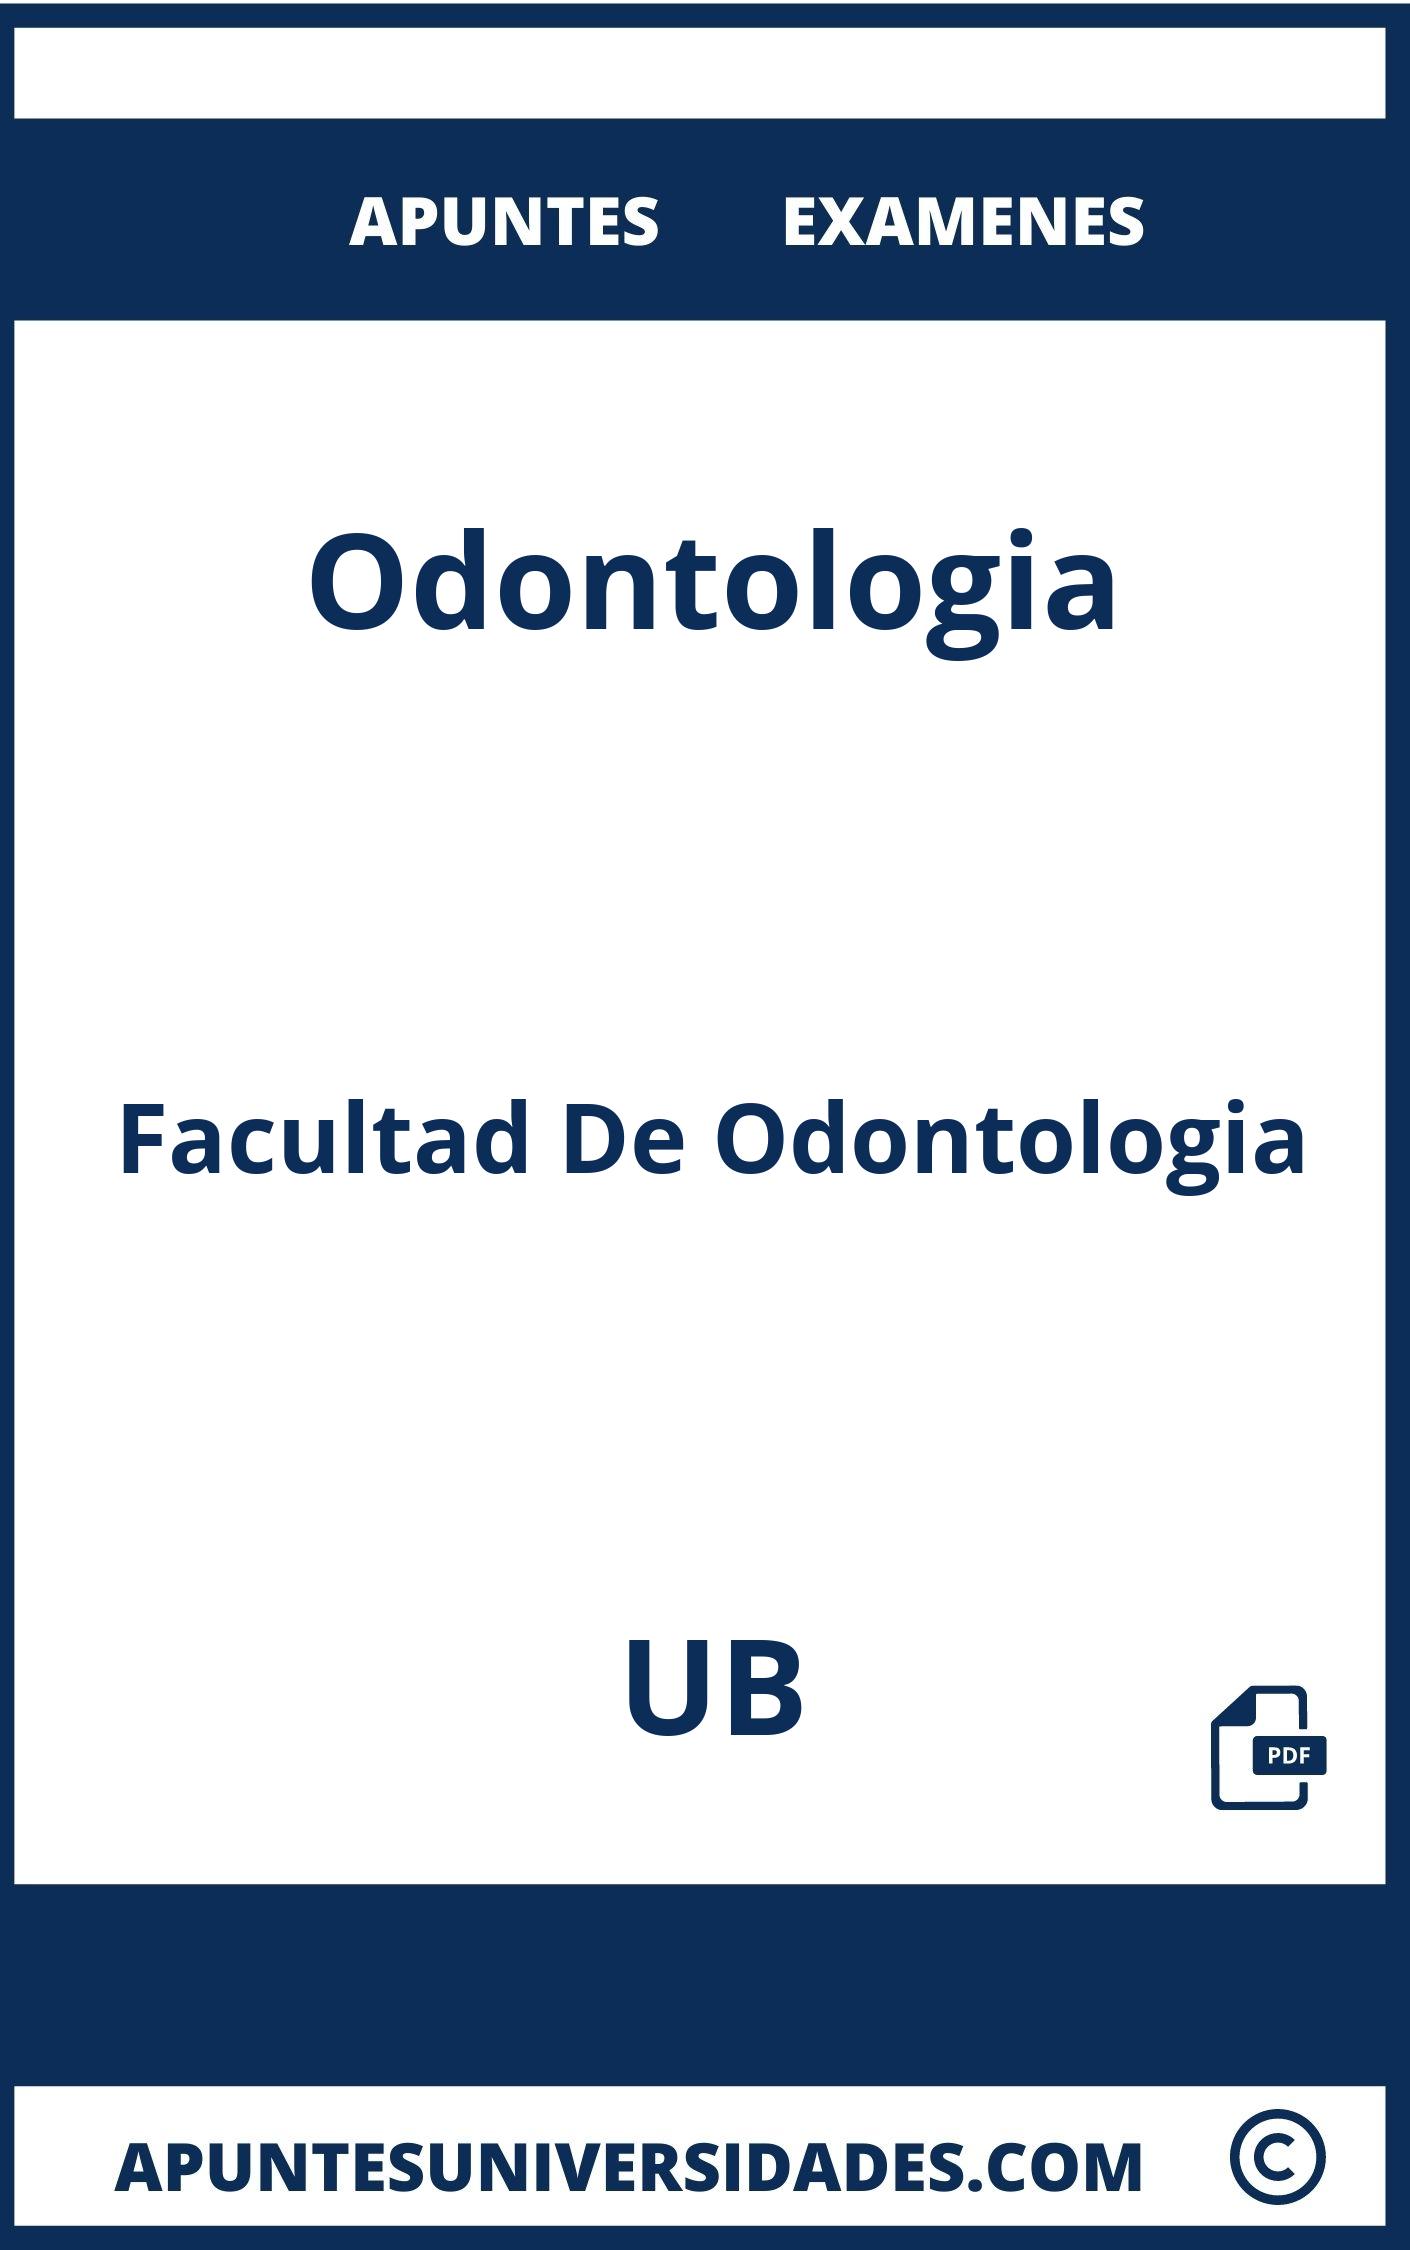 Odontologia UB Examenes Apuntes